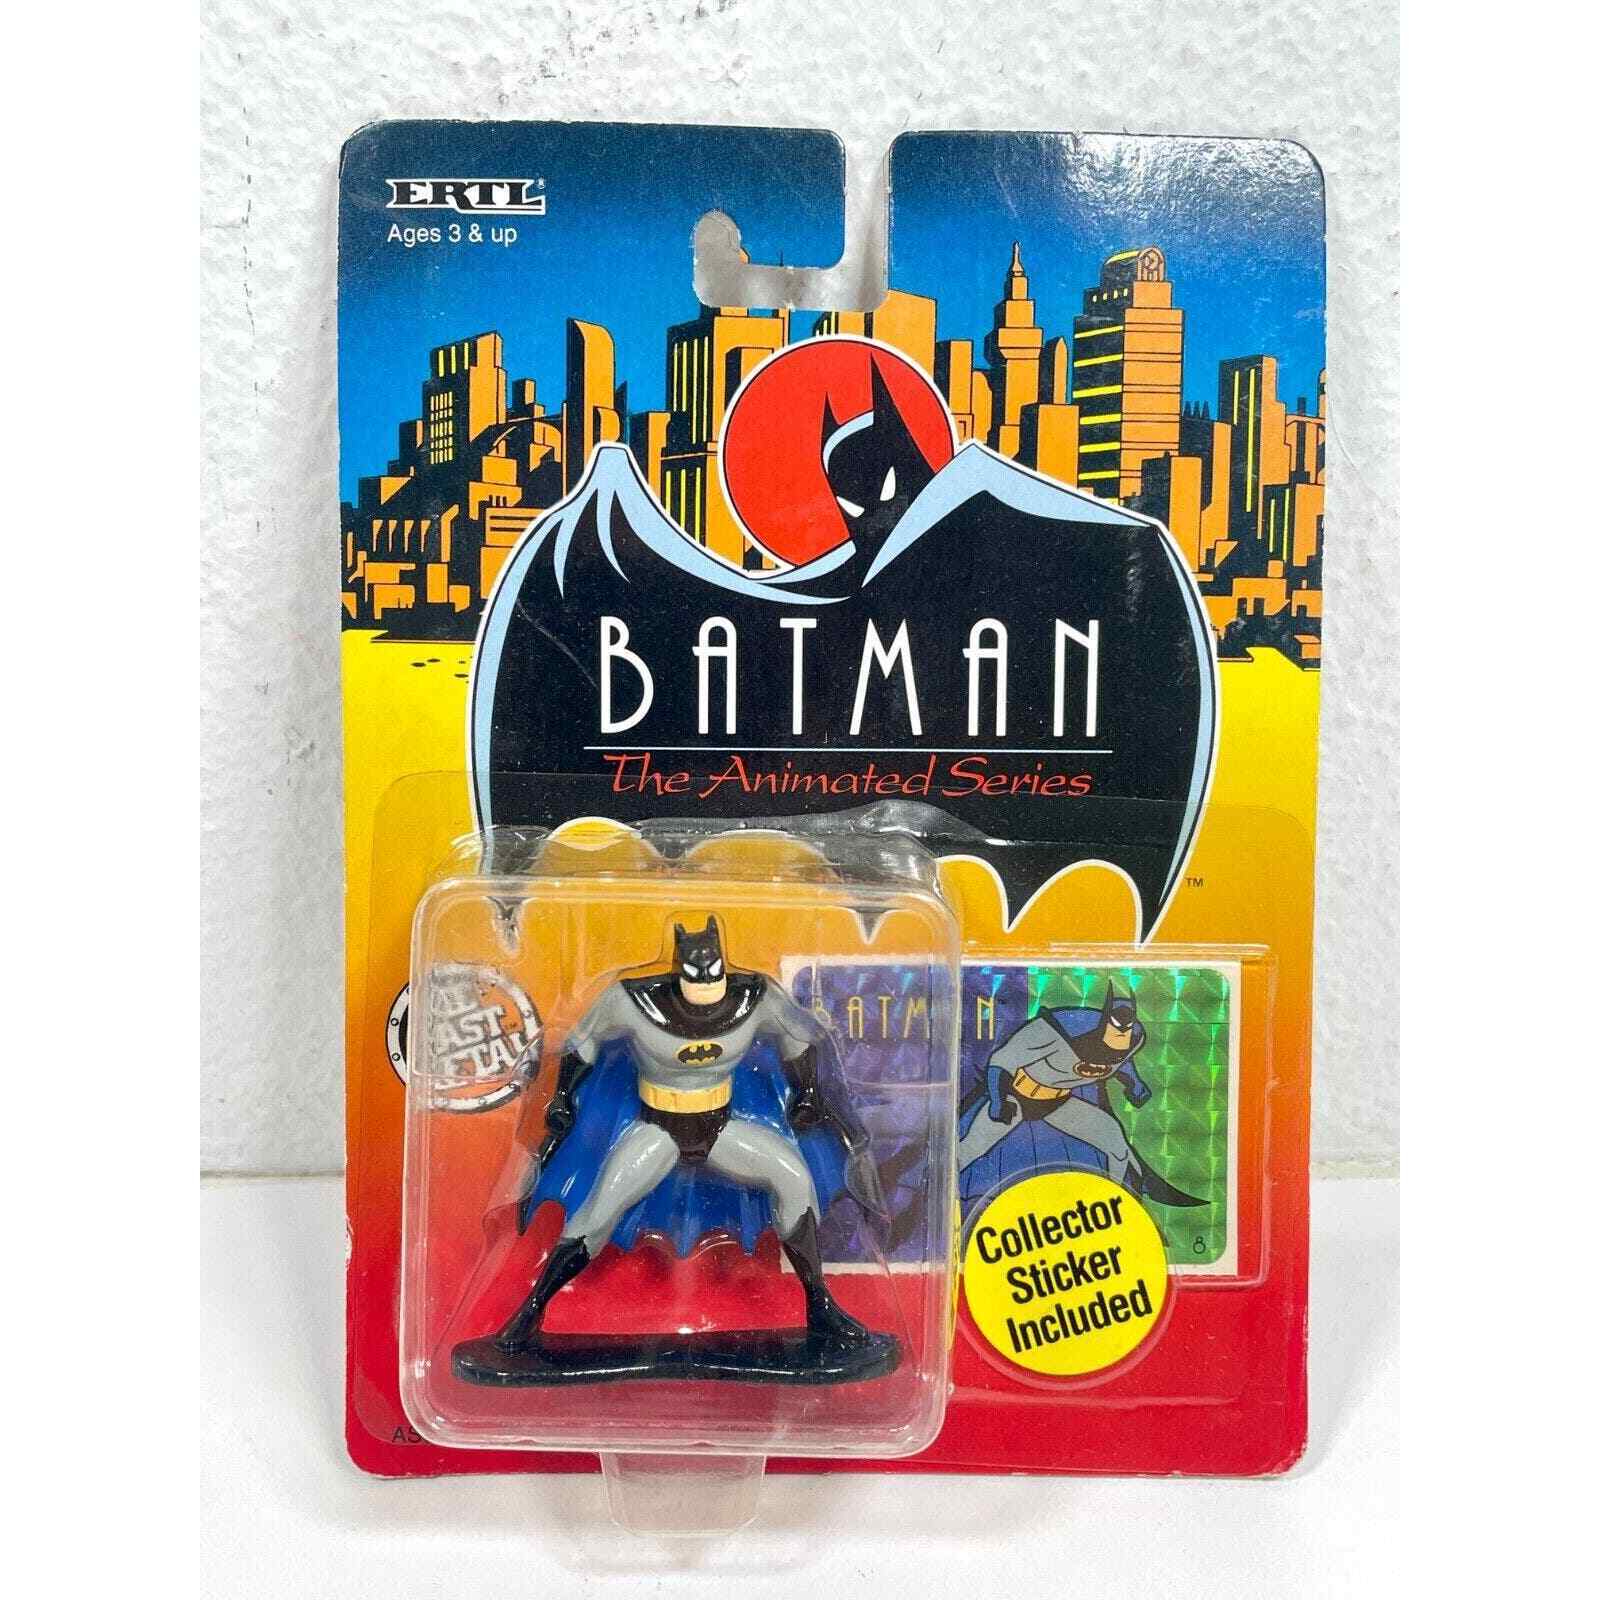 Ertl Batman Animated Series 2.5" Diecast Metal Figure W/ Collector Sticker 2469